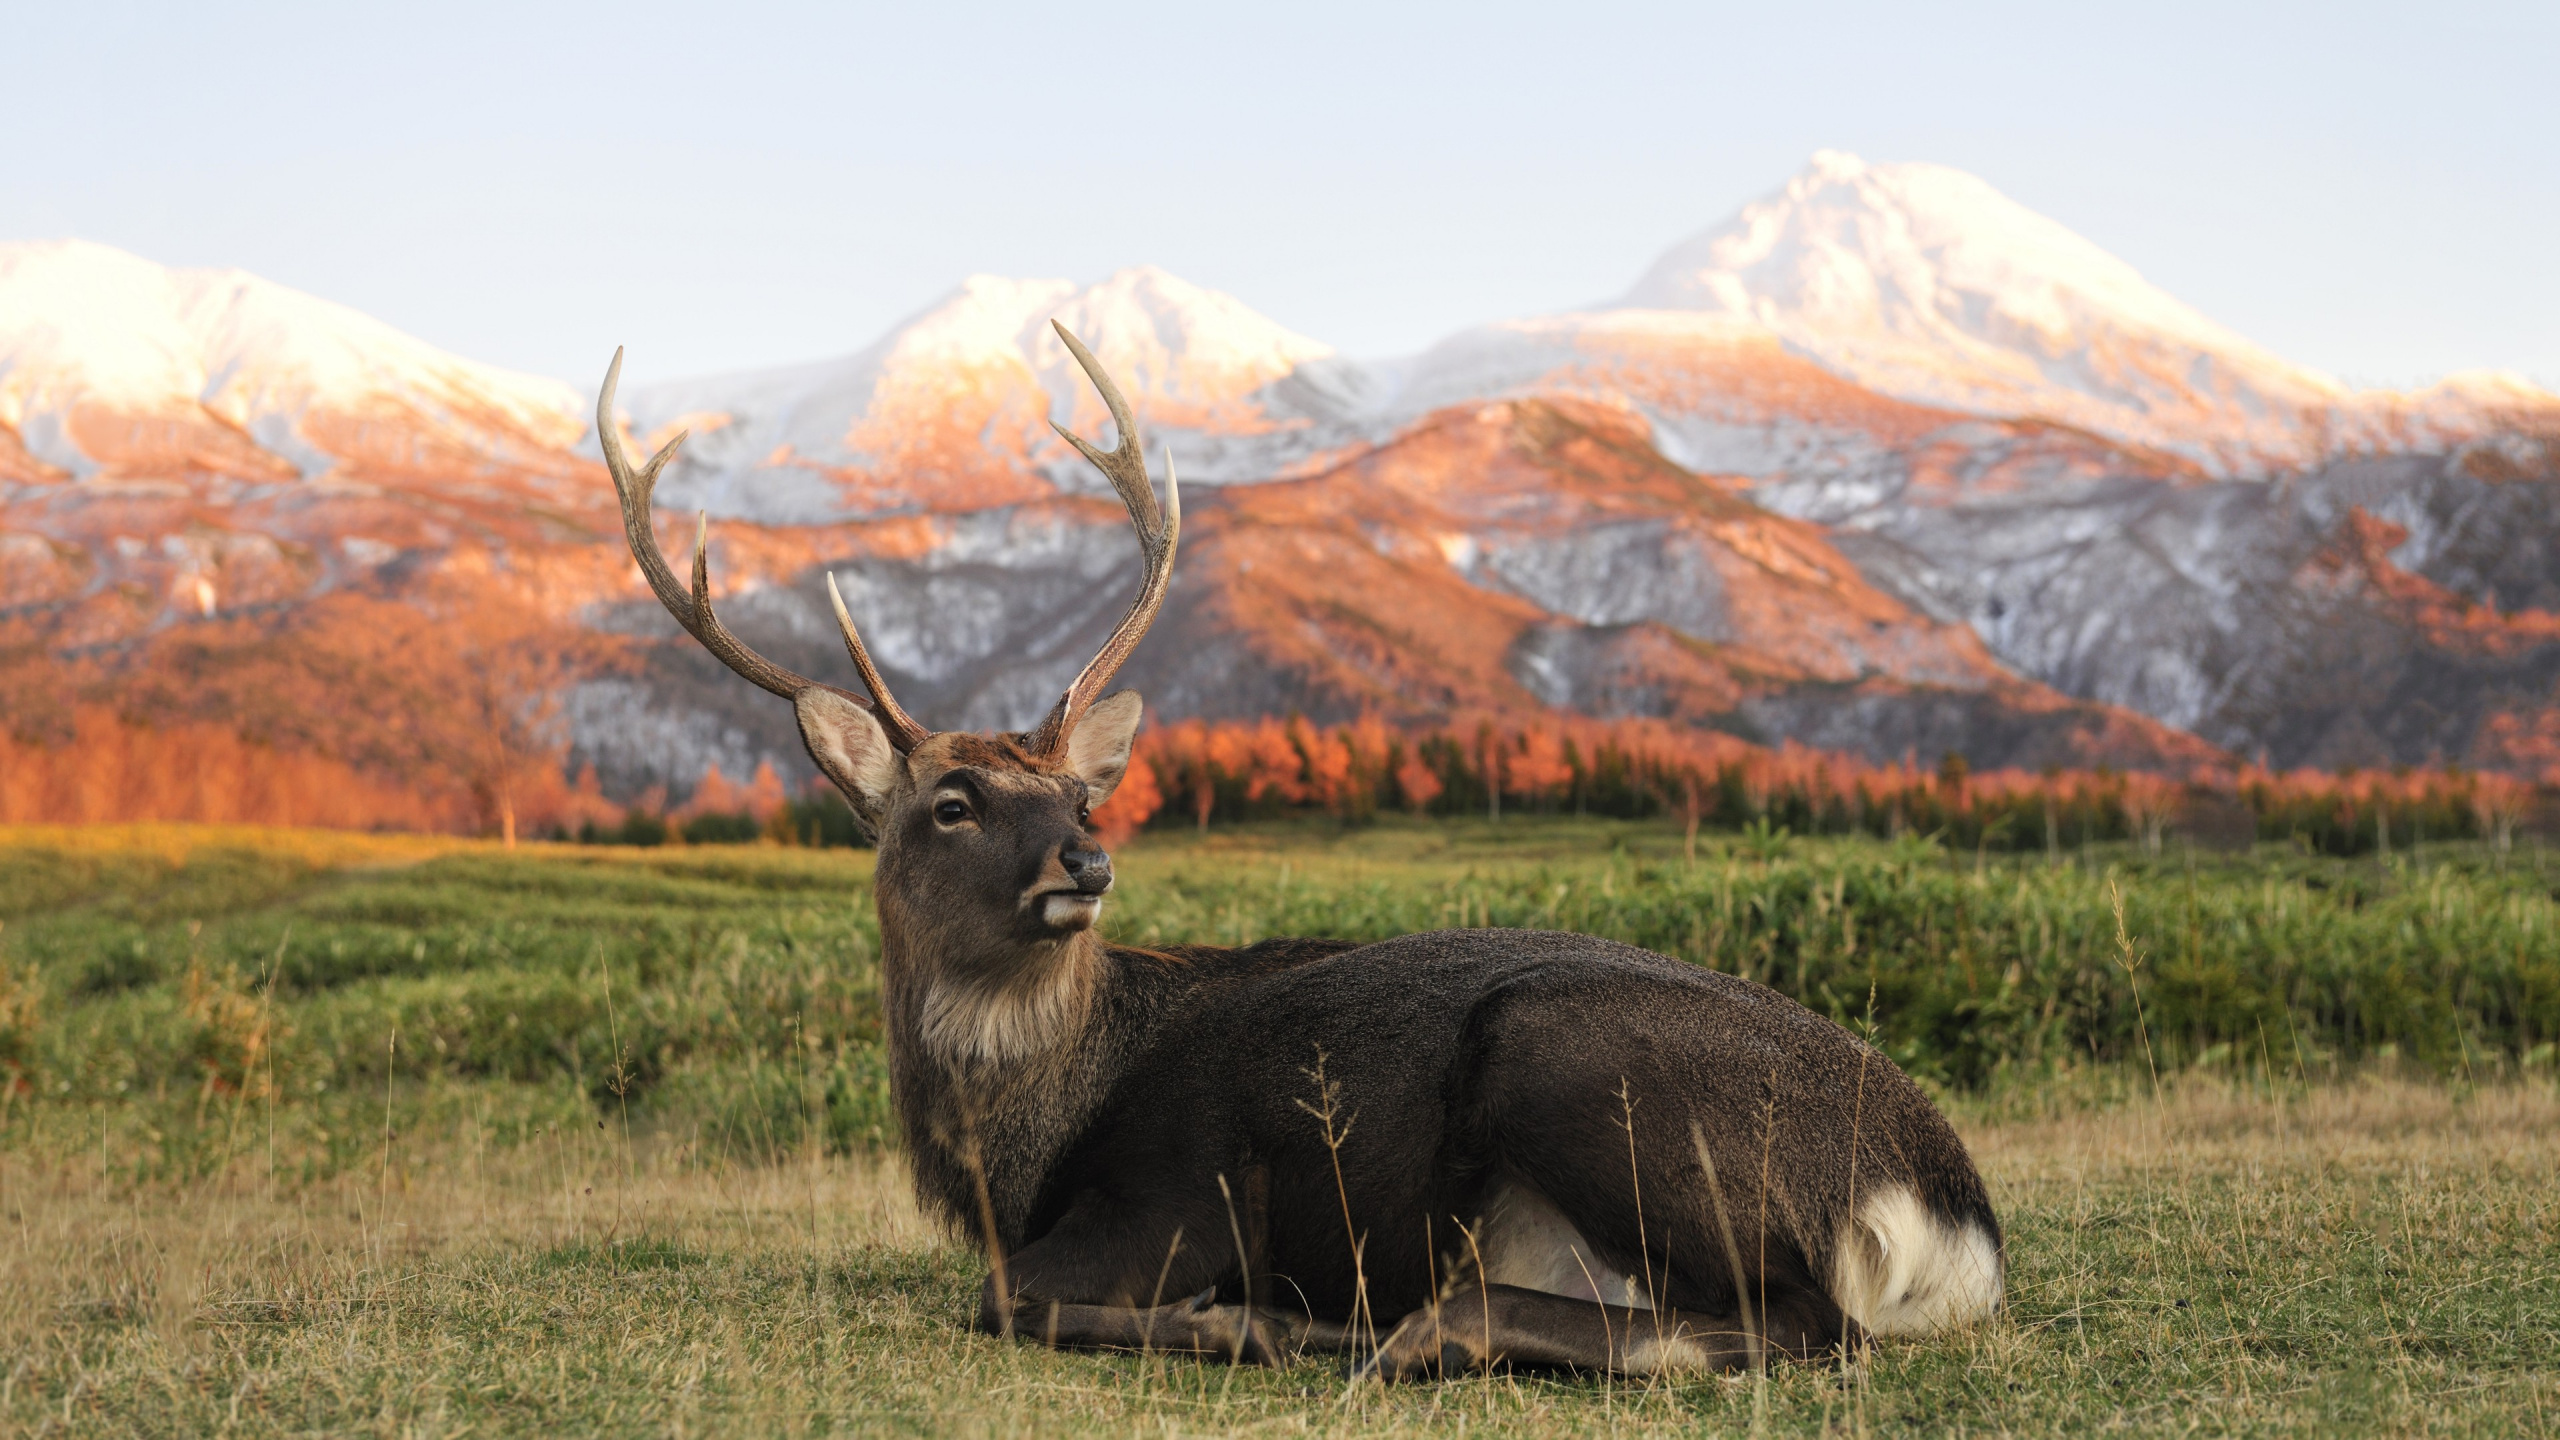 Brown Deer on Green Grass Field During Daytime. Wallpaper in 2560x1440 Resolution